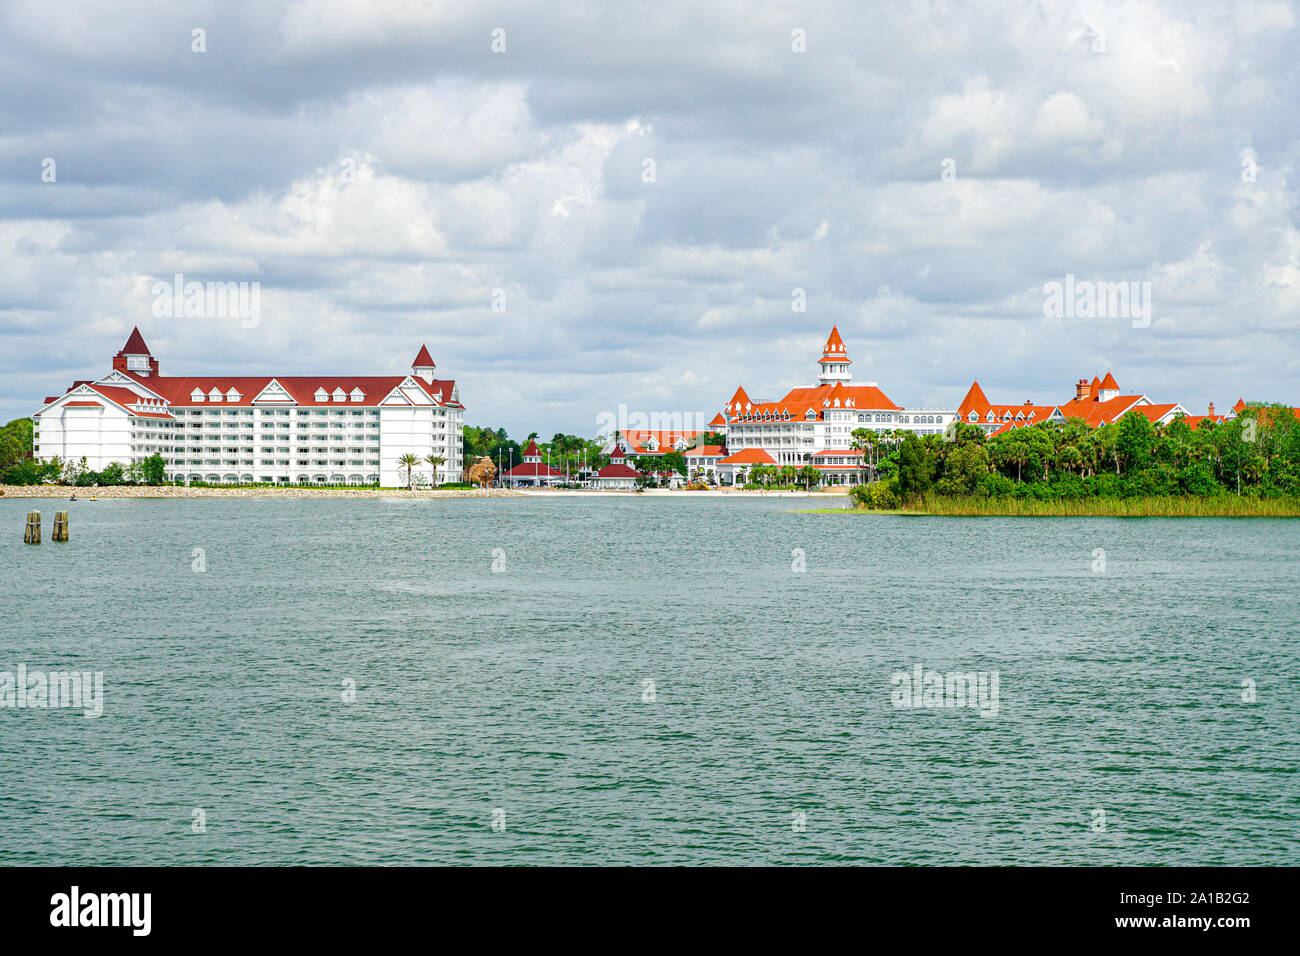 Panoramic Views of Orlando Florida Hotels. Stock Photo